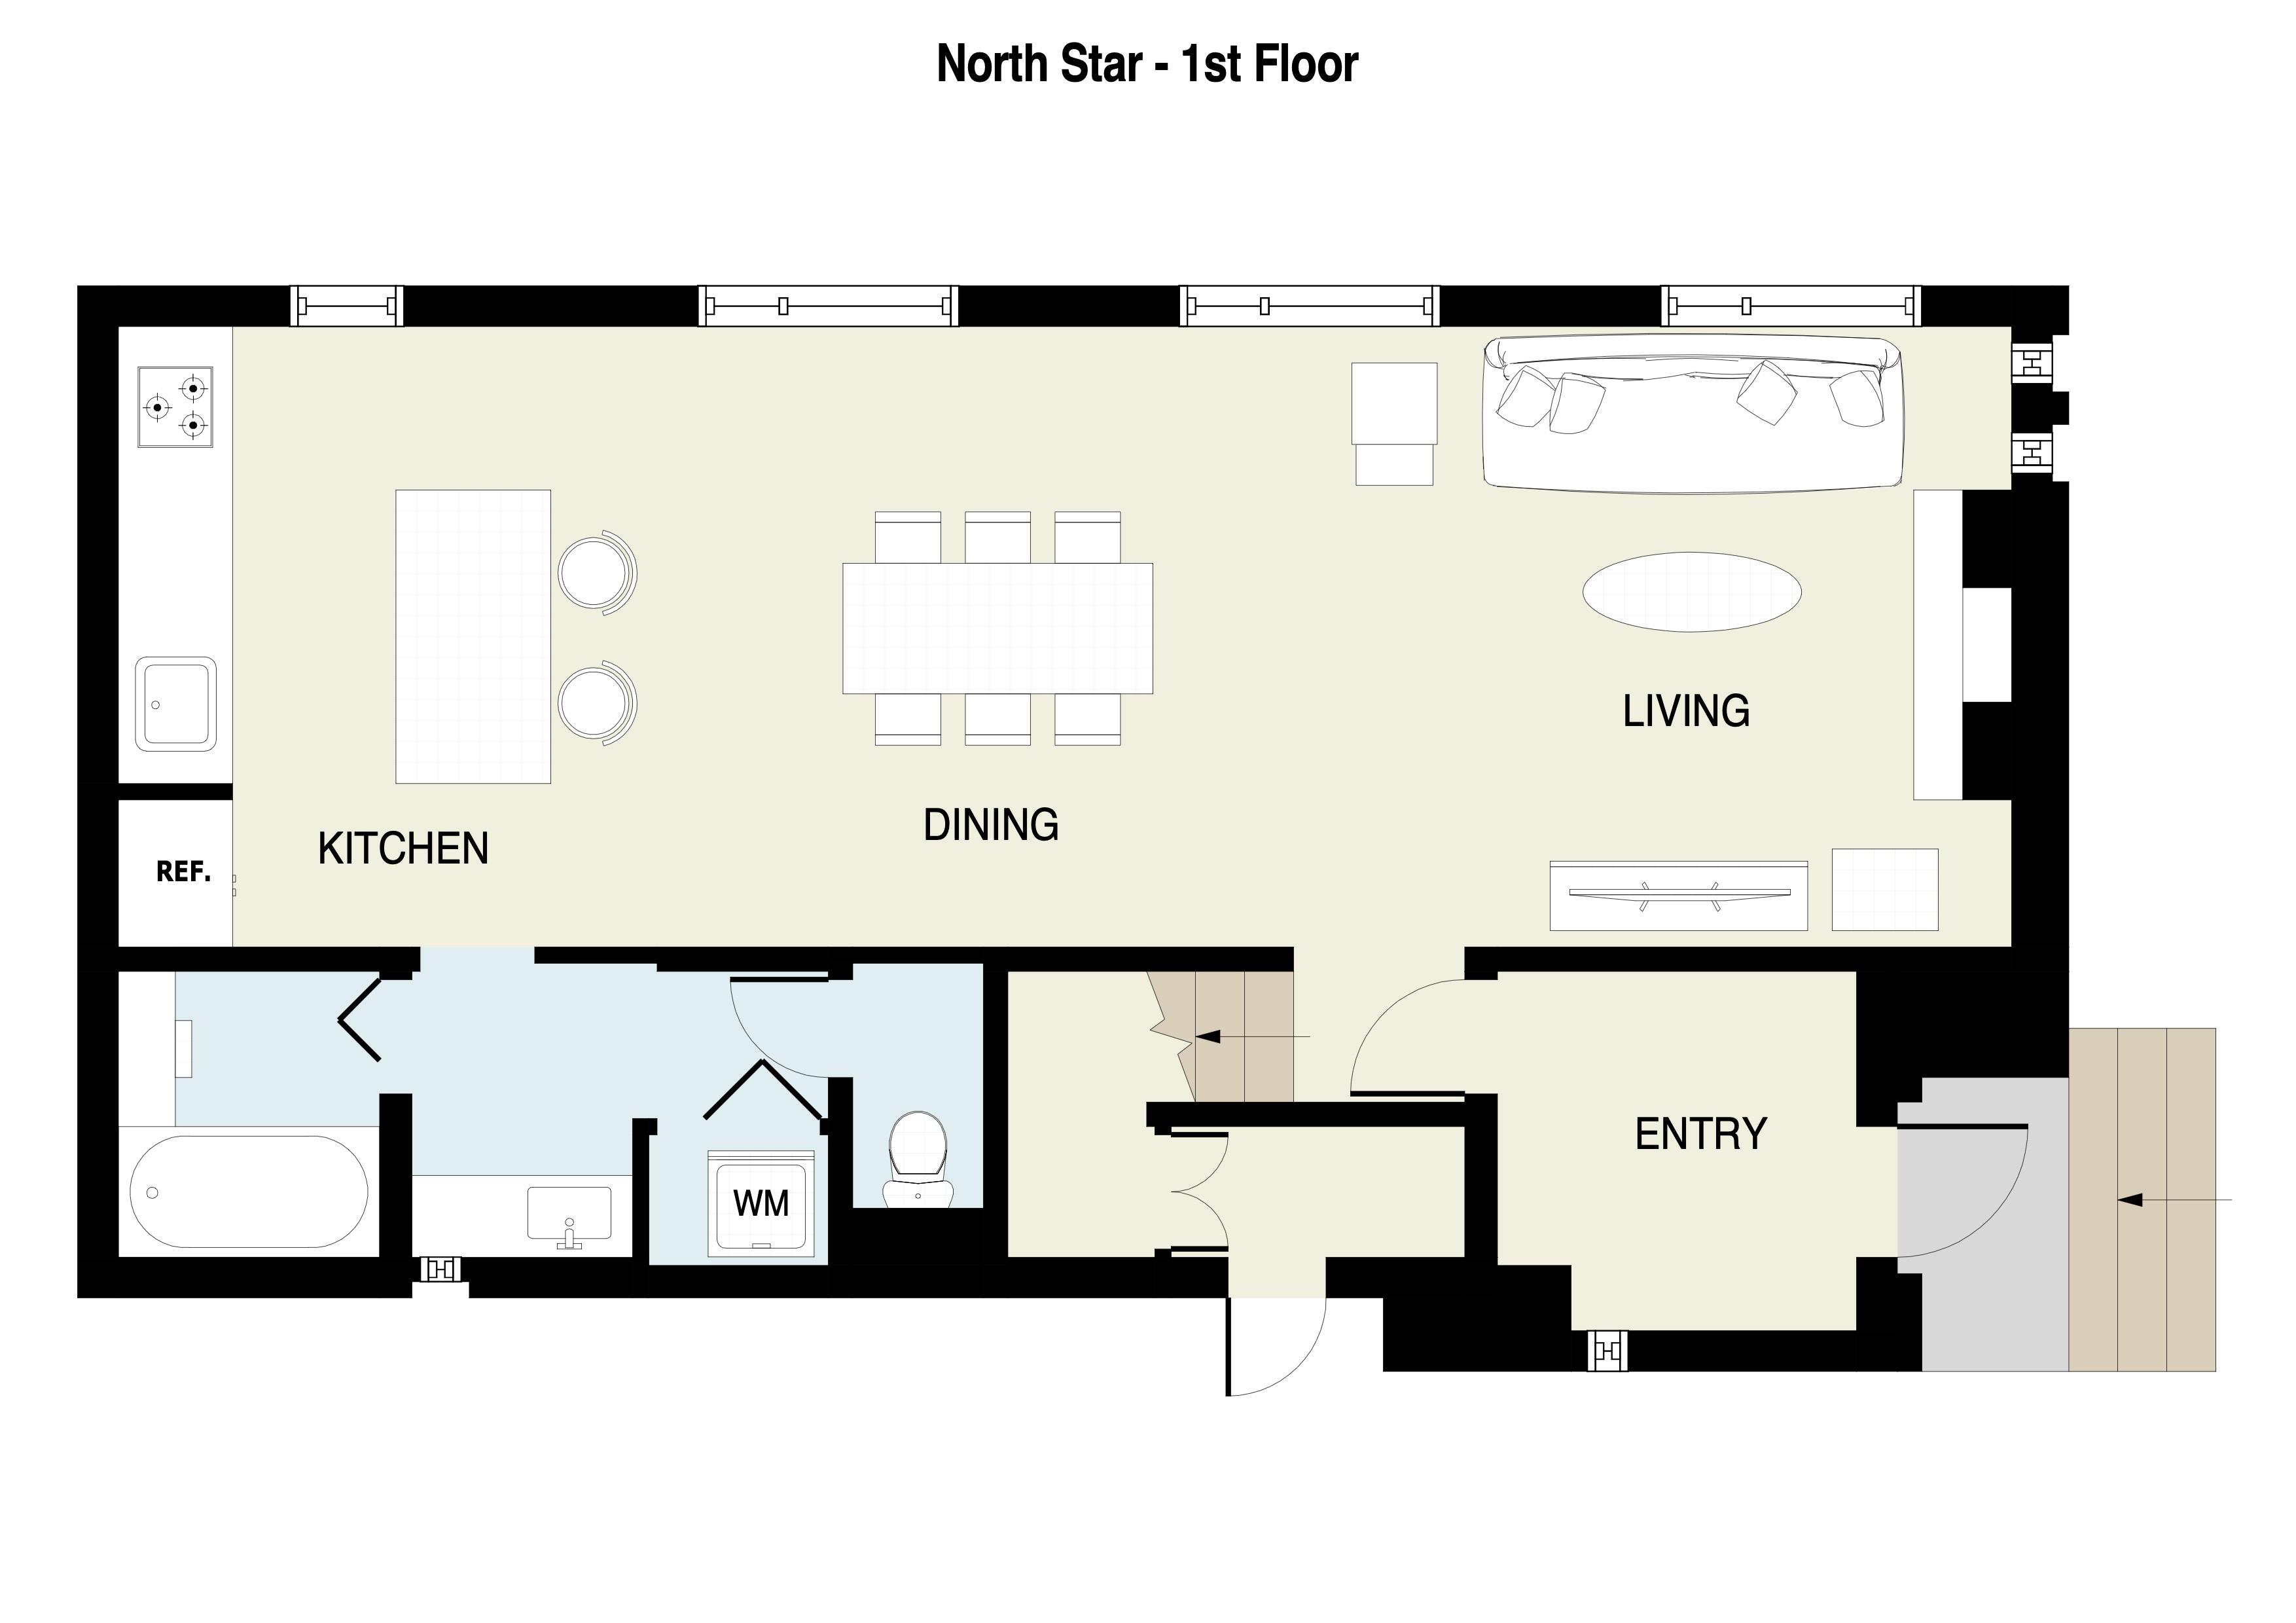 North Star 1st floor plans